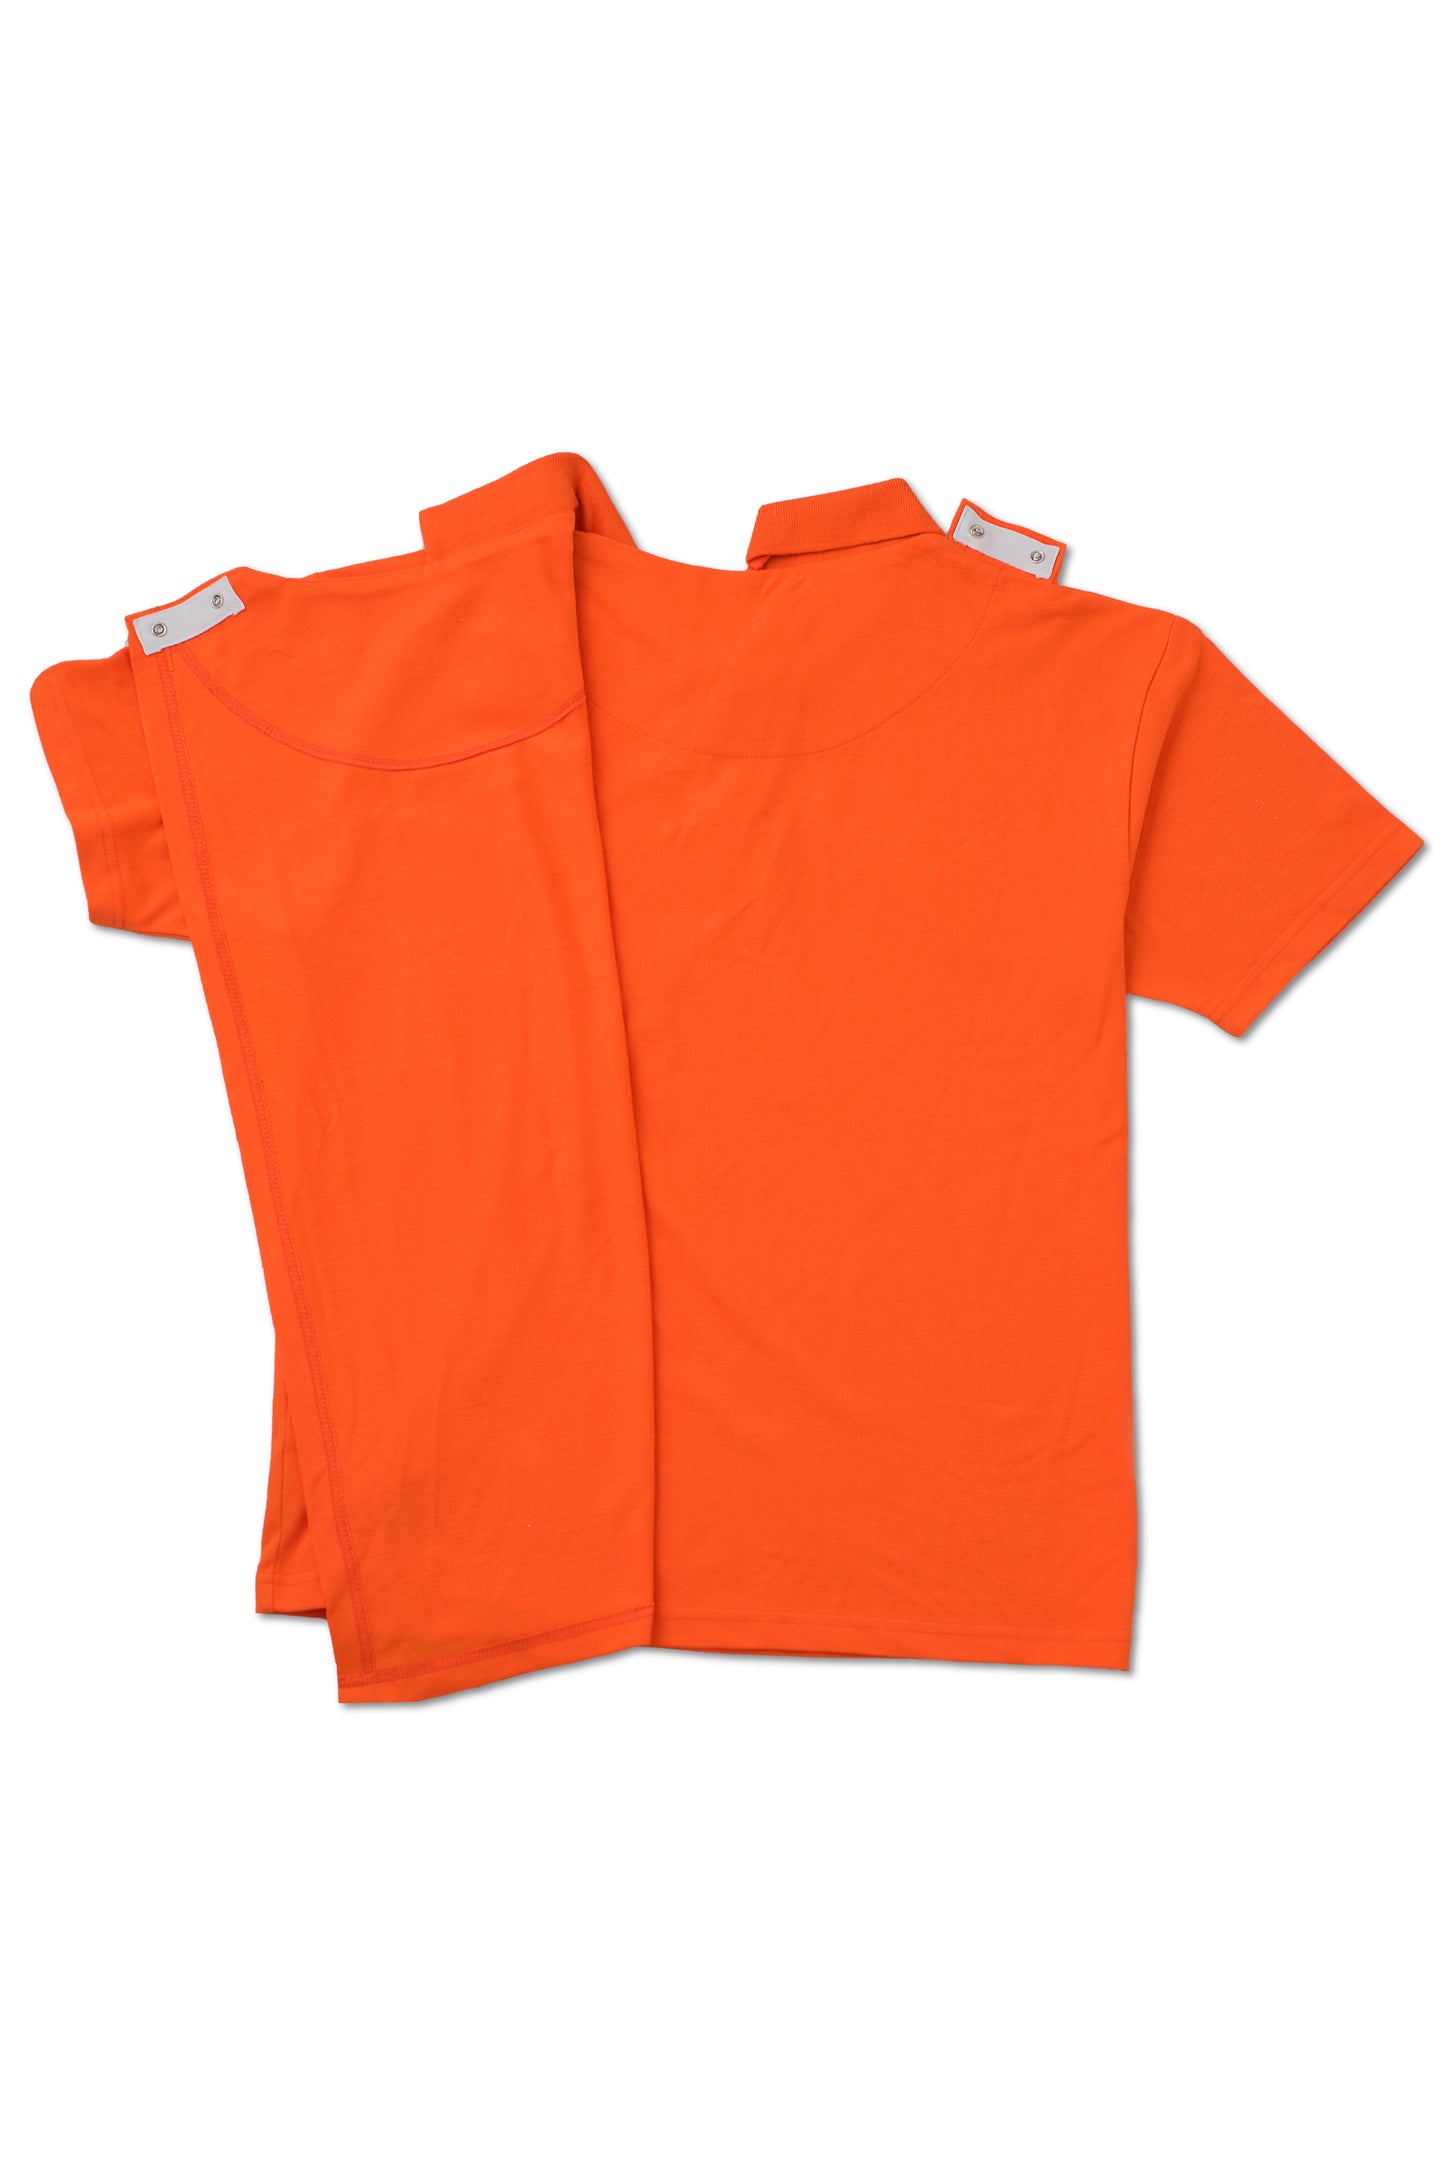 Men's Adaptive Polo Half Sleeves Orange T-Shirt